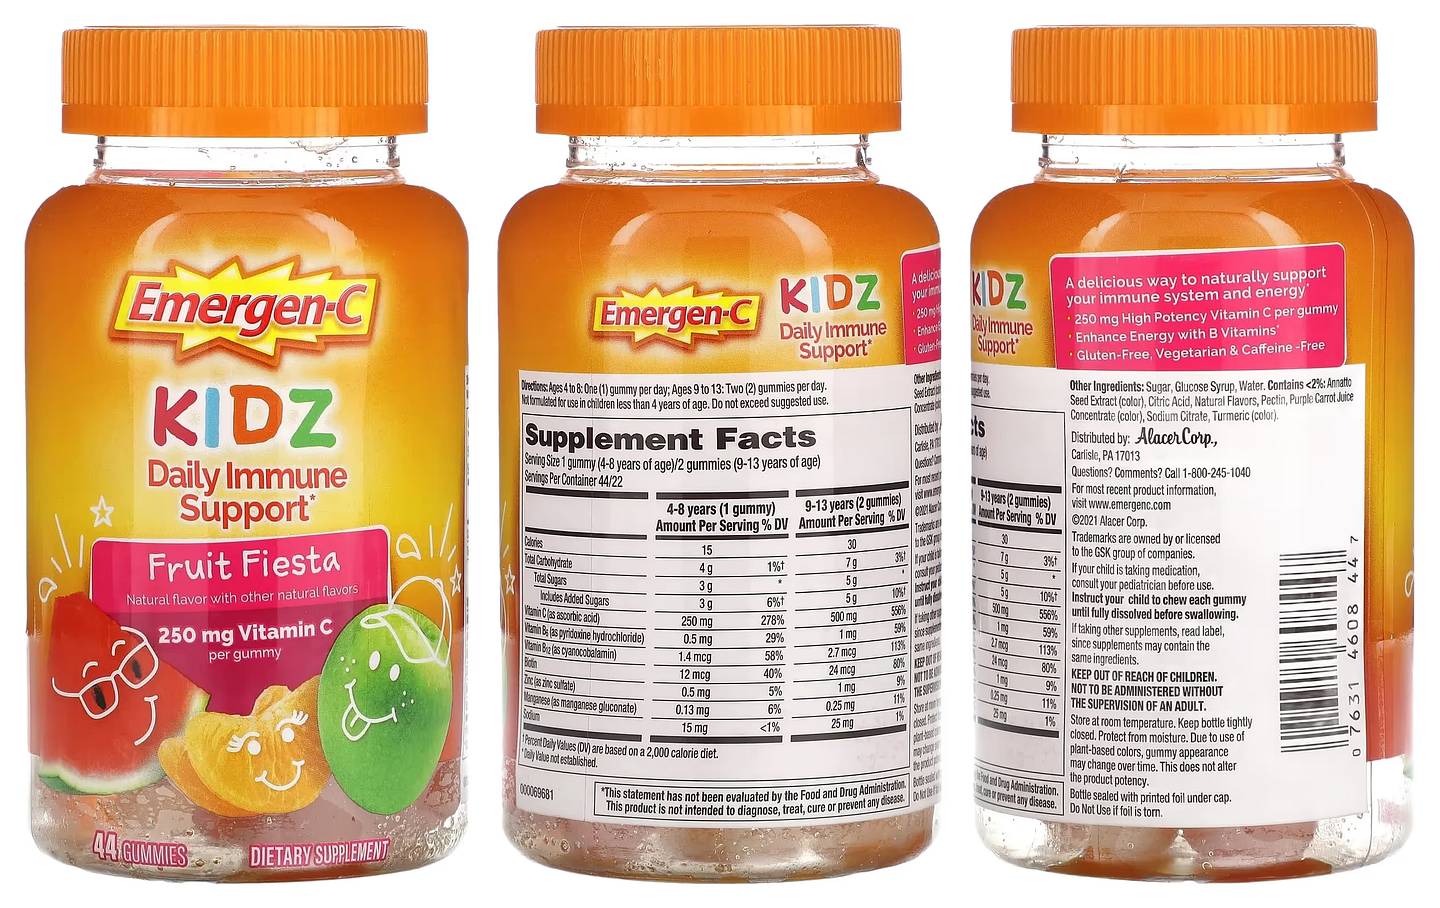 Emergen-C, Kids Daily Immune Support packaging